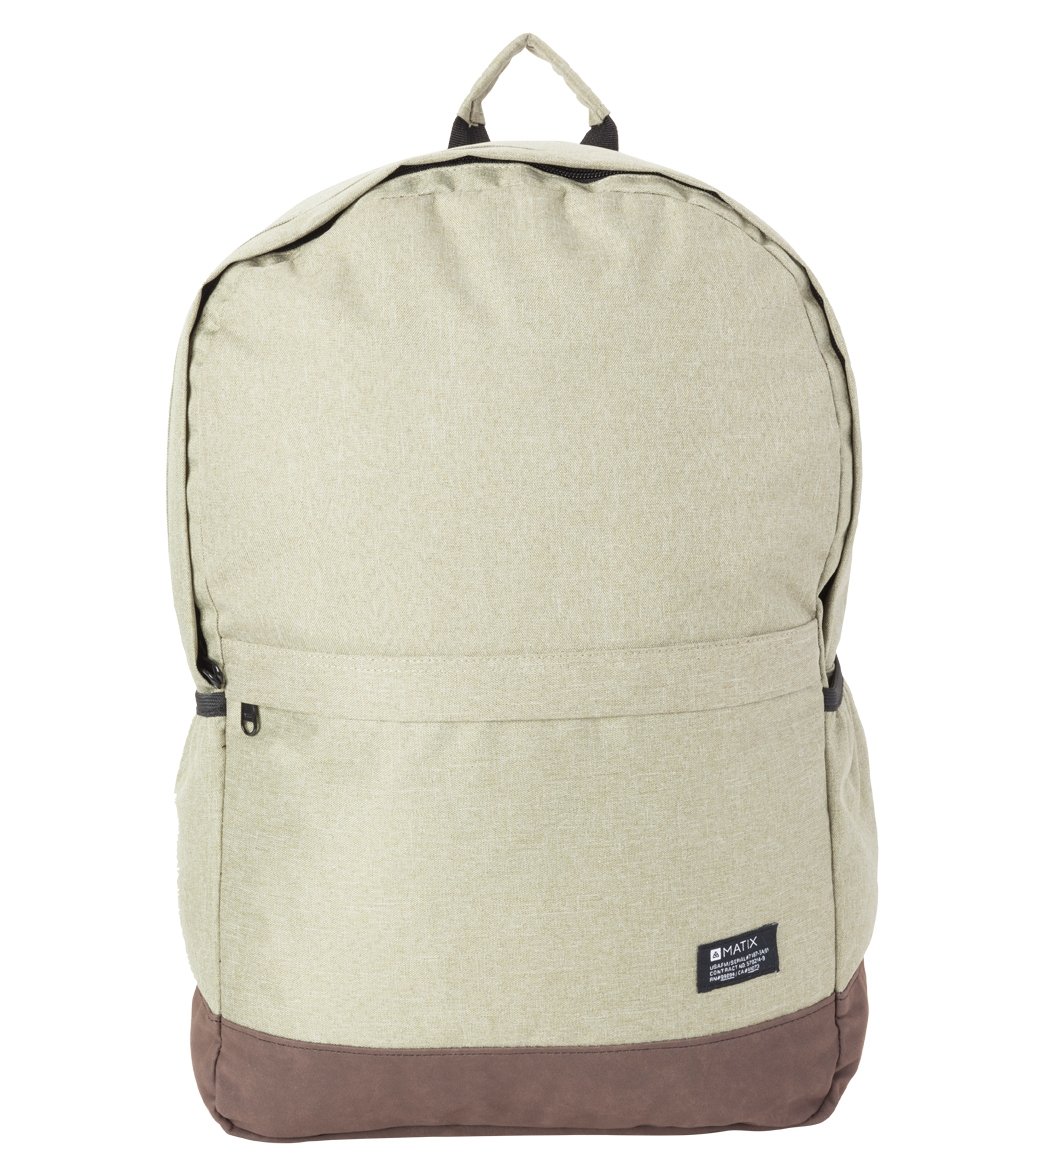 Matix Men's Standard Backpack - Army Polyester - Swimoutlet.com